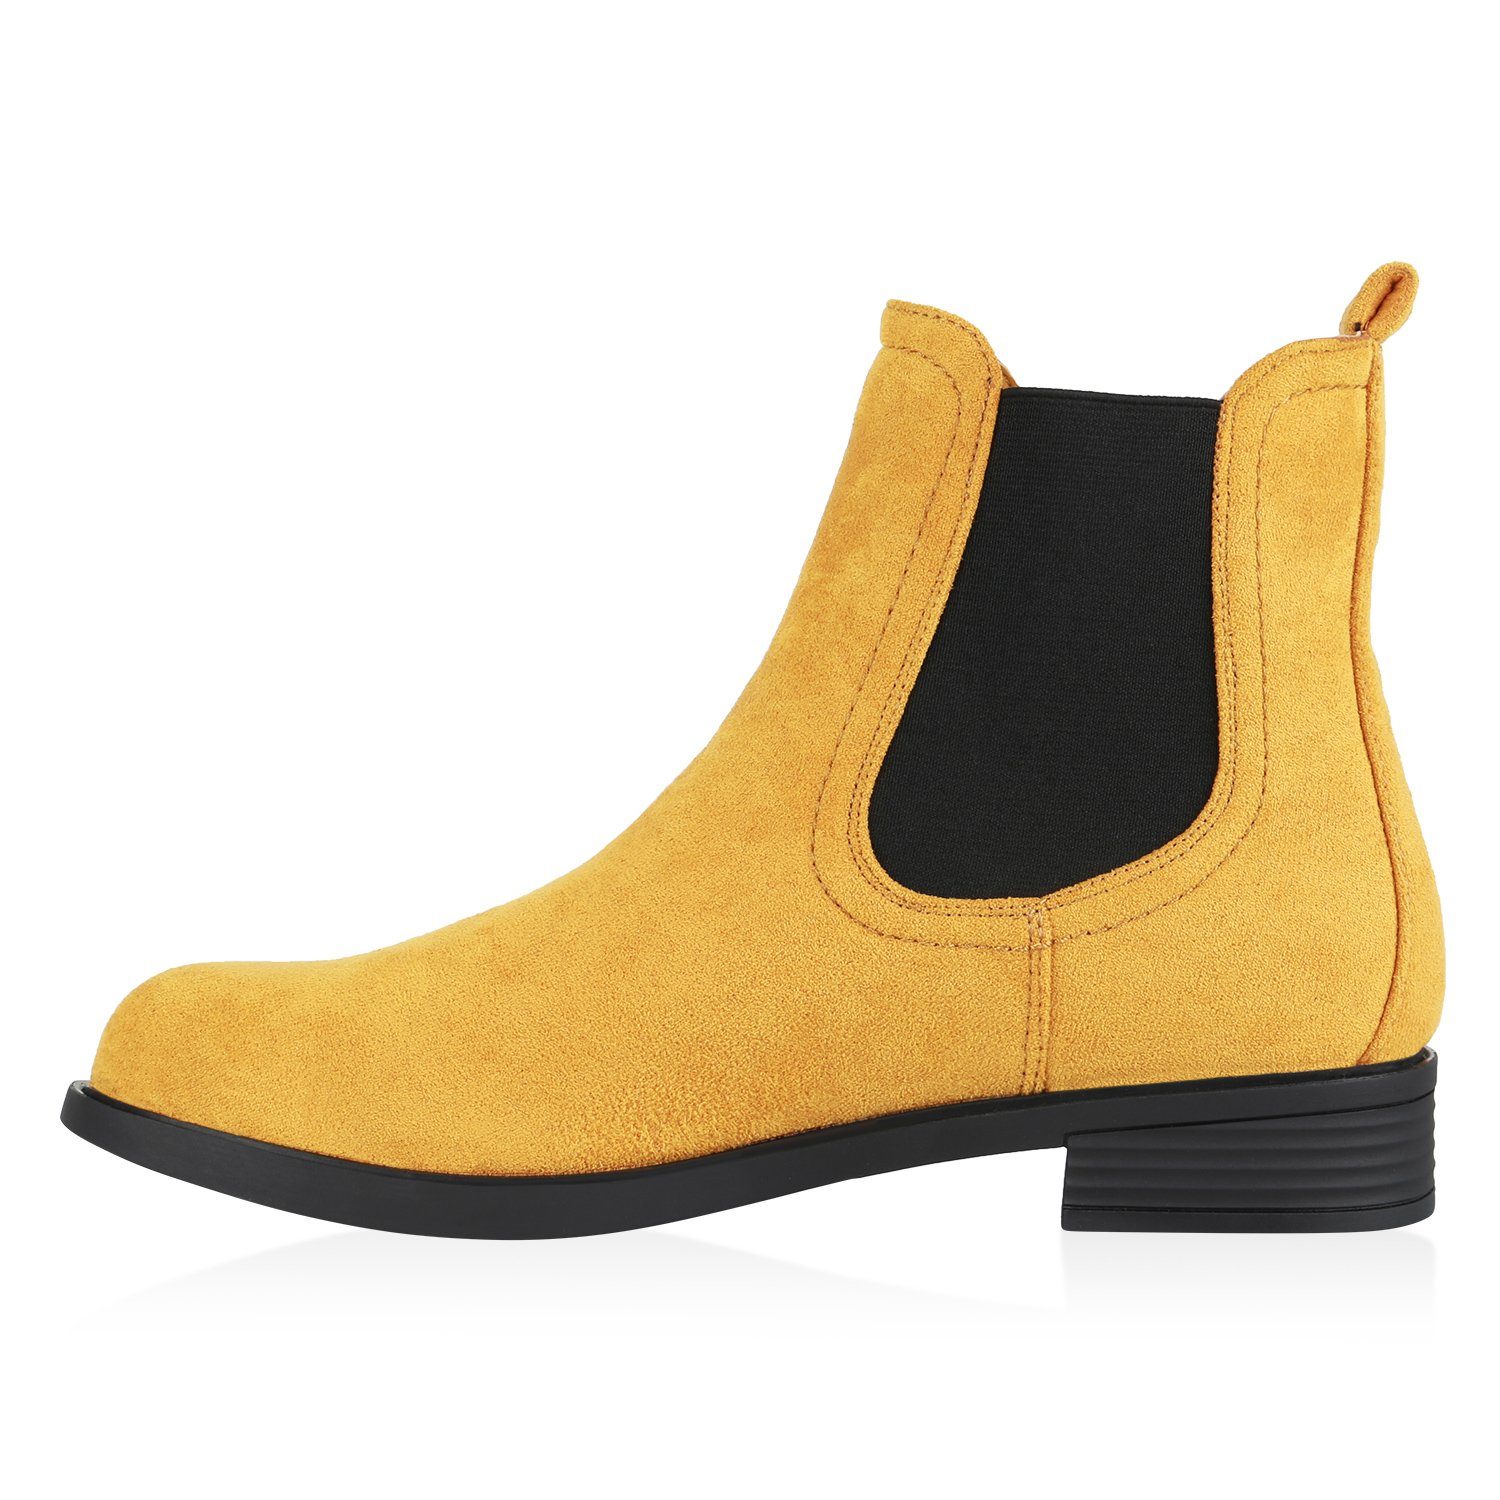 HILL Dark Schuhe Bequeme 835401 Yellow Chelseaboots VAN